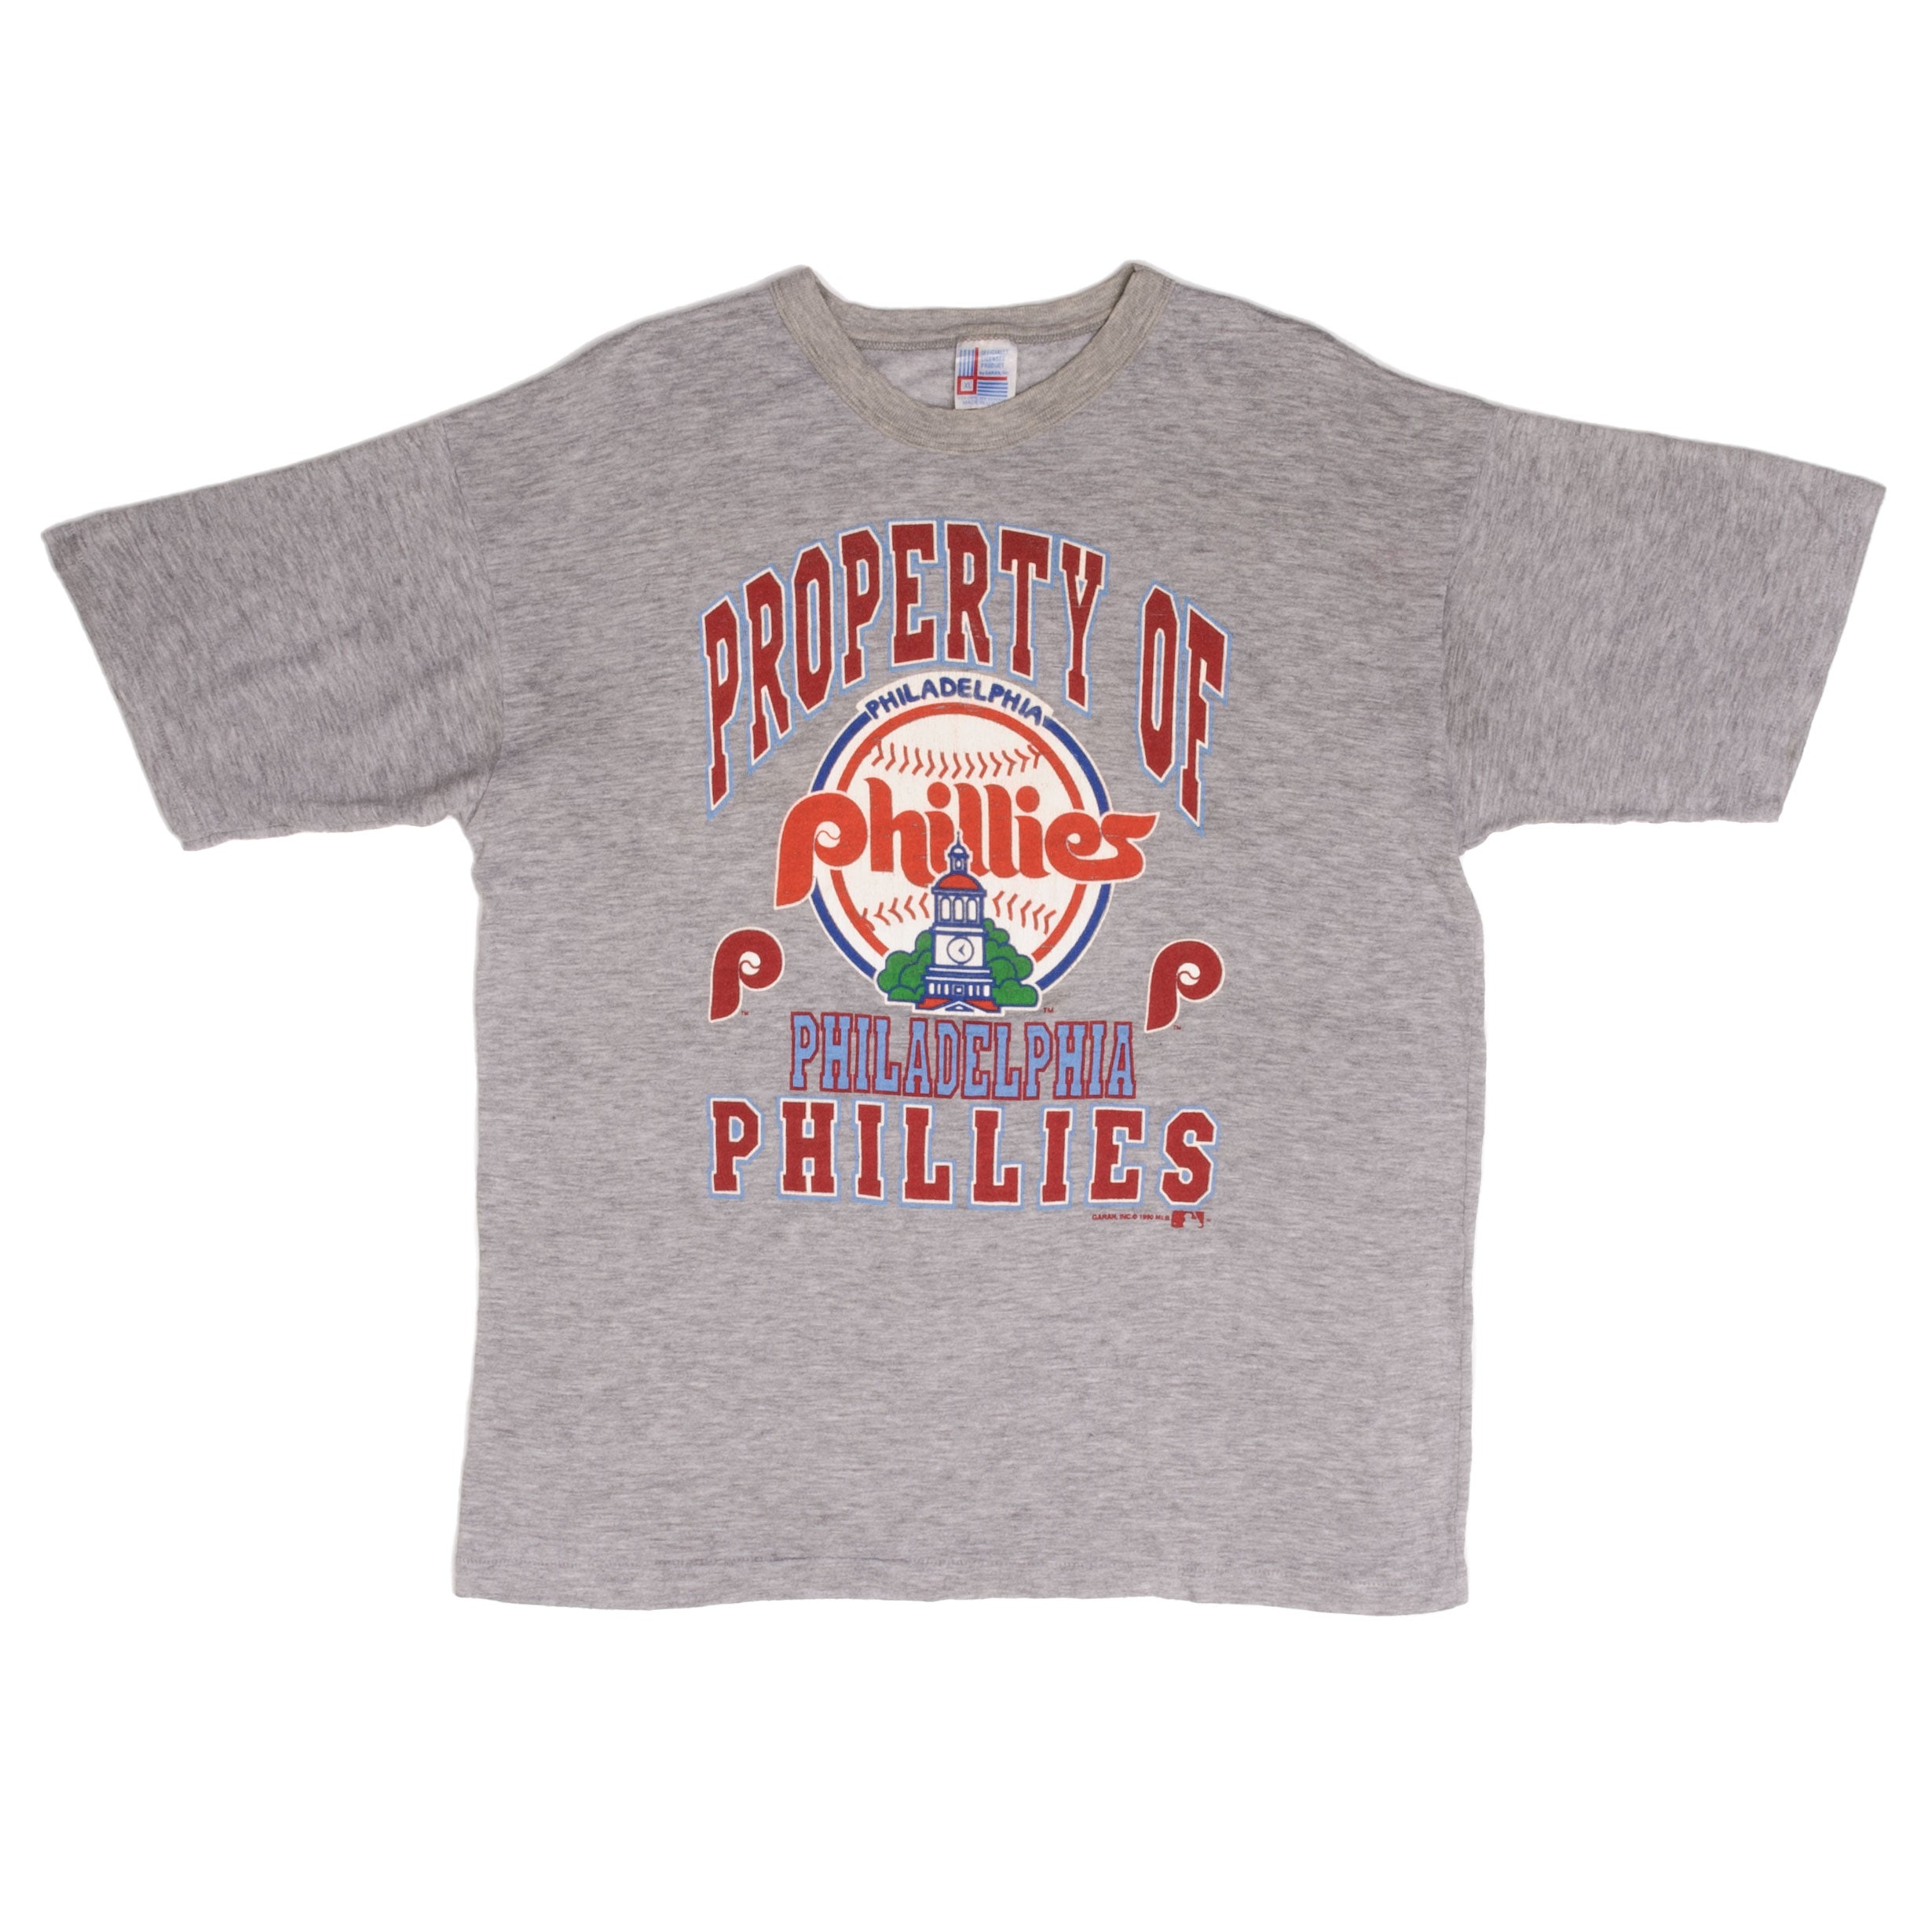 Vintage Philadelphia Phillies T shirt XL